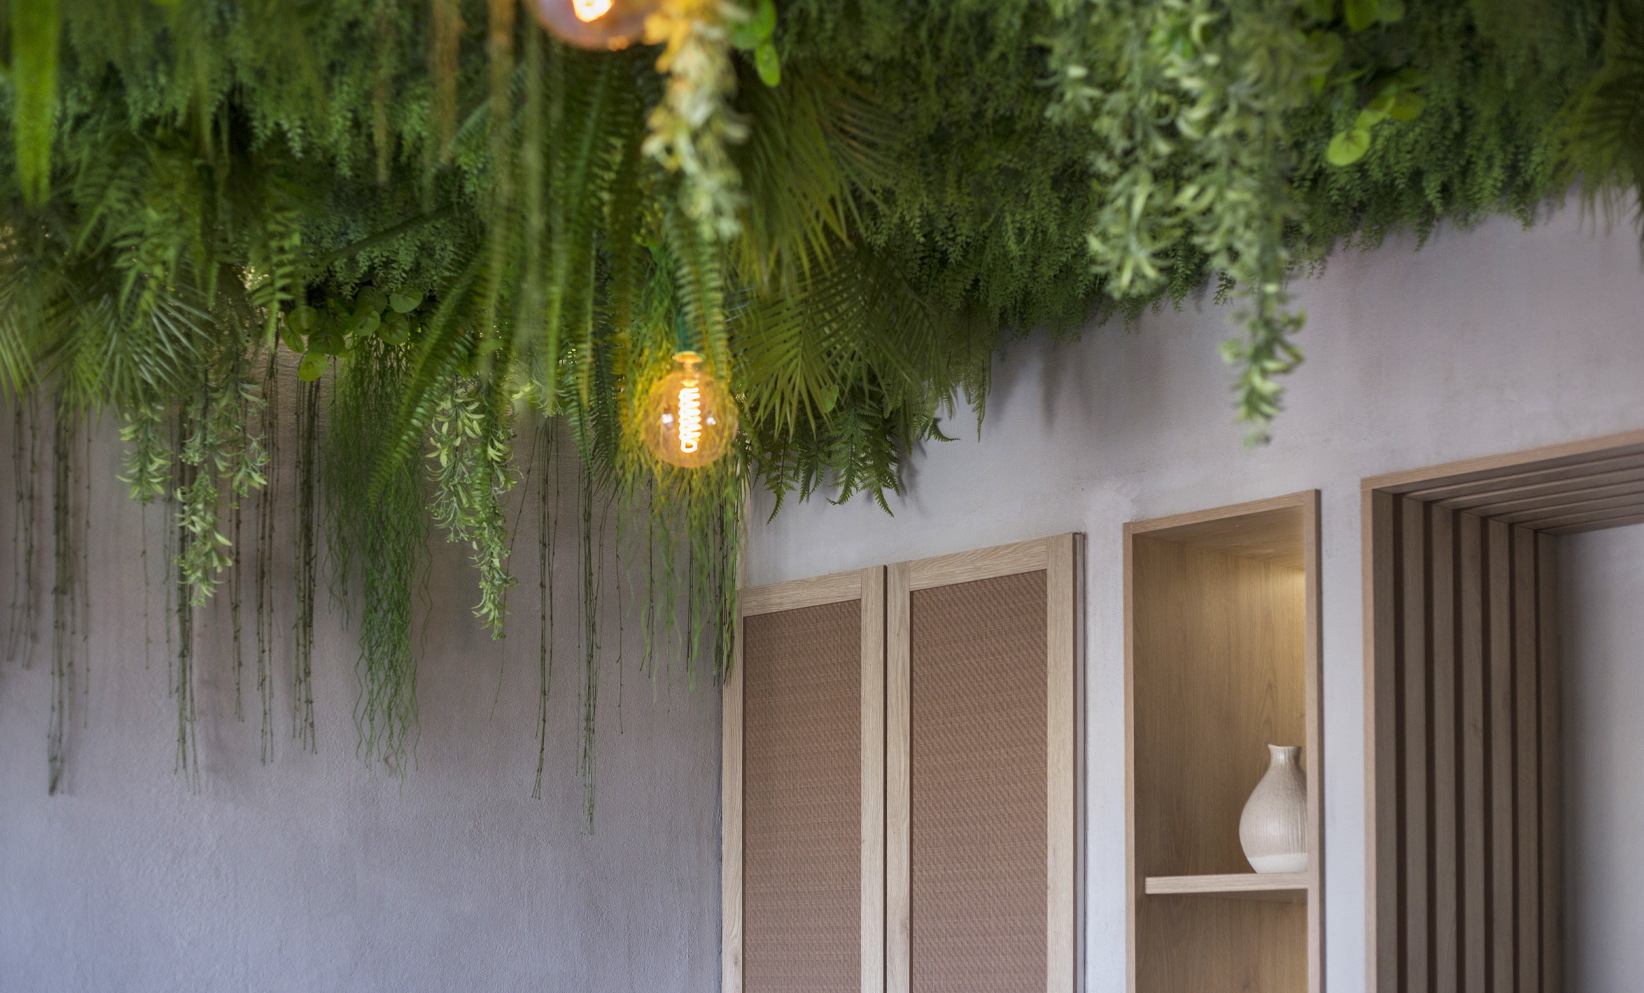 8-masazaki-reception-interior-design-spa-massage-wood-ceiling-plants